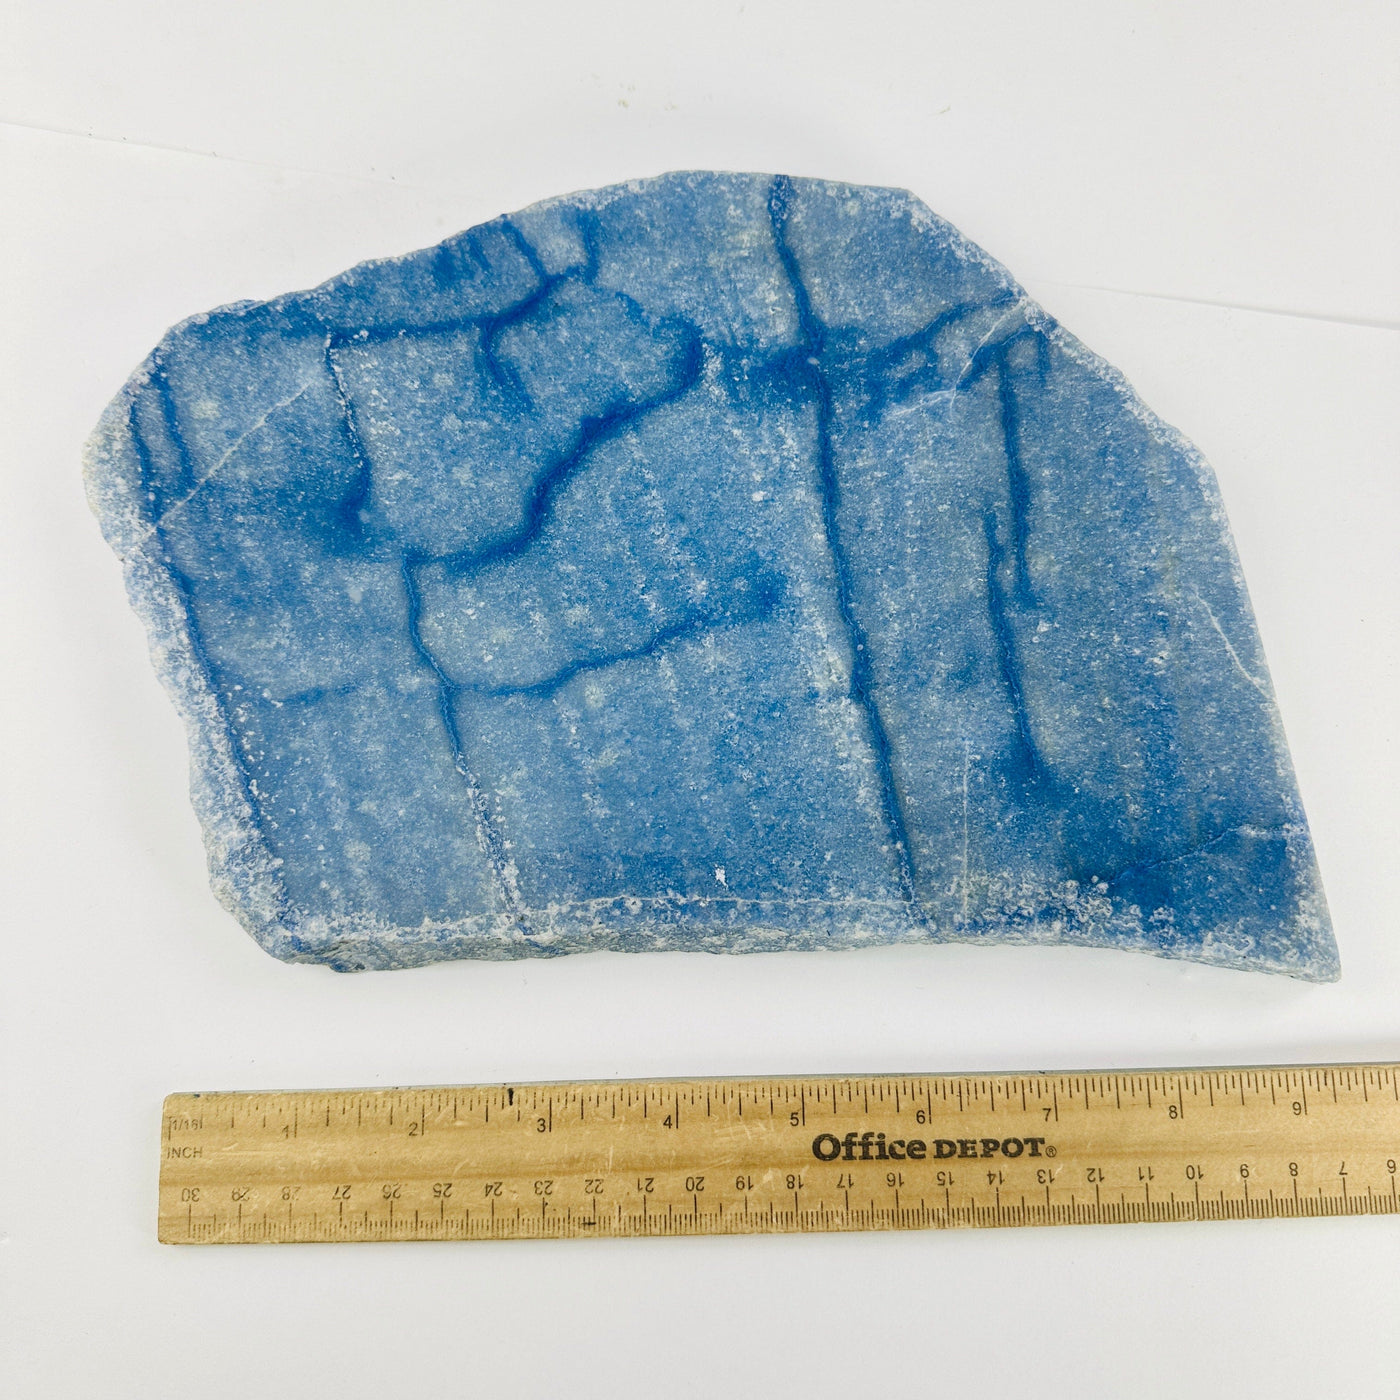 Blue Quartz Platter - Crystal Decor - OOAK - with ruler for size reference